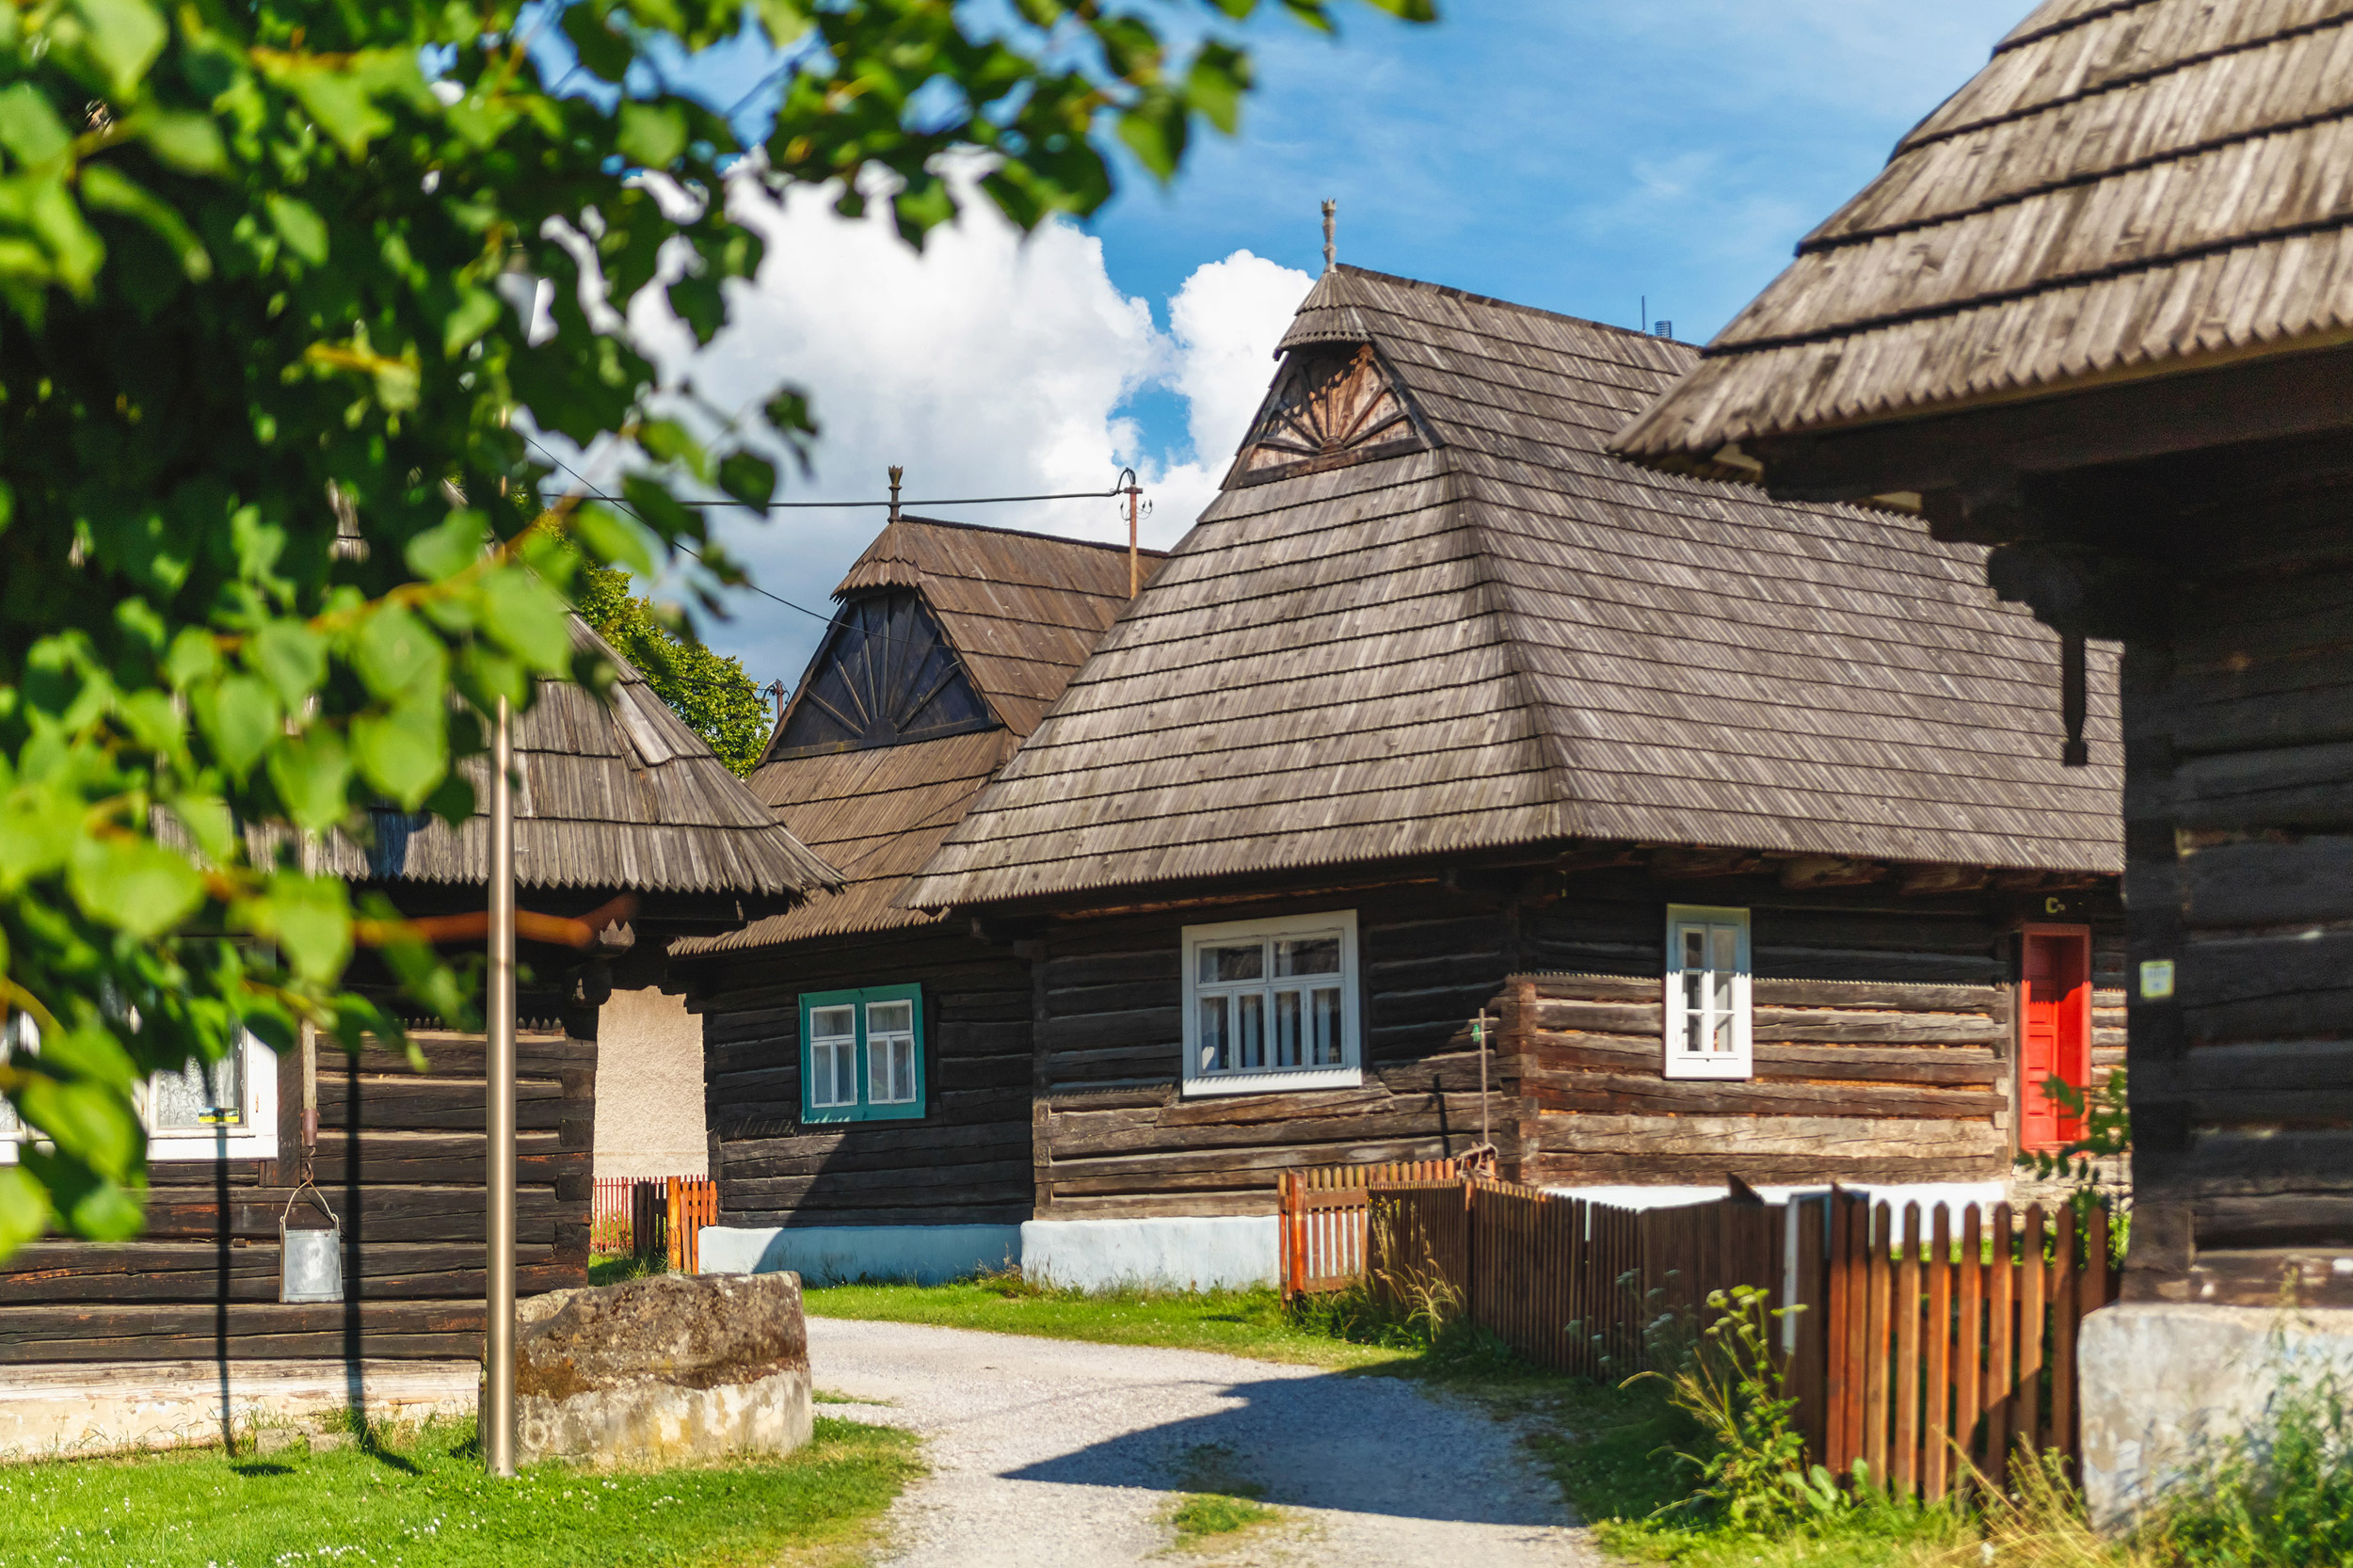 Old Slovak village in Podbiel